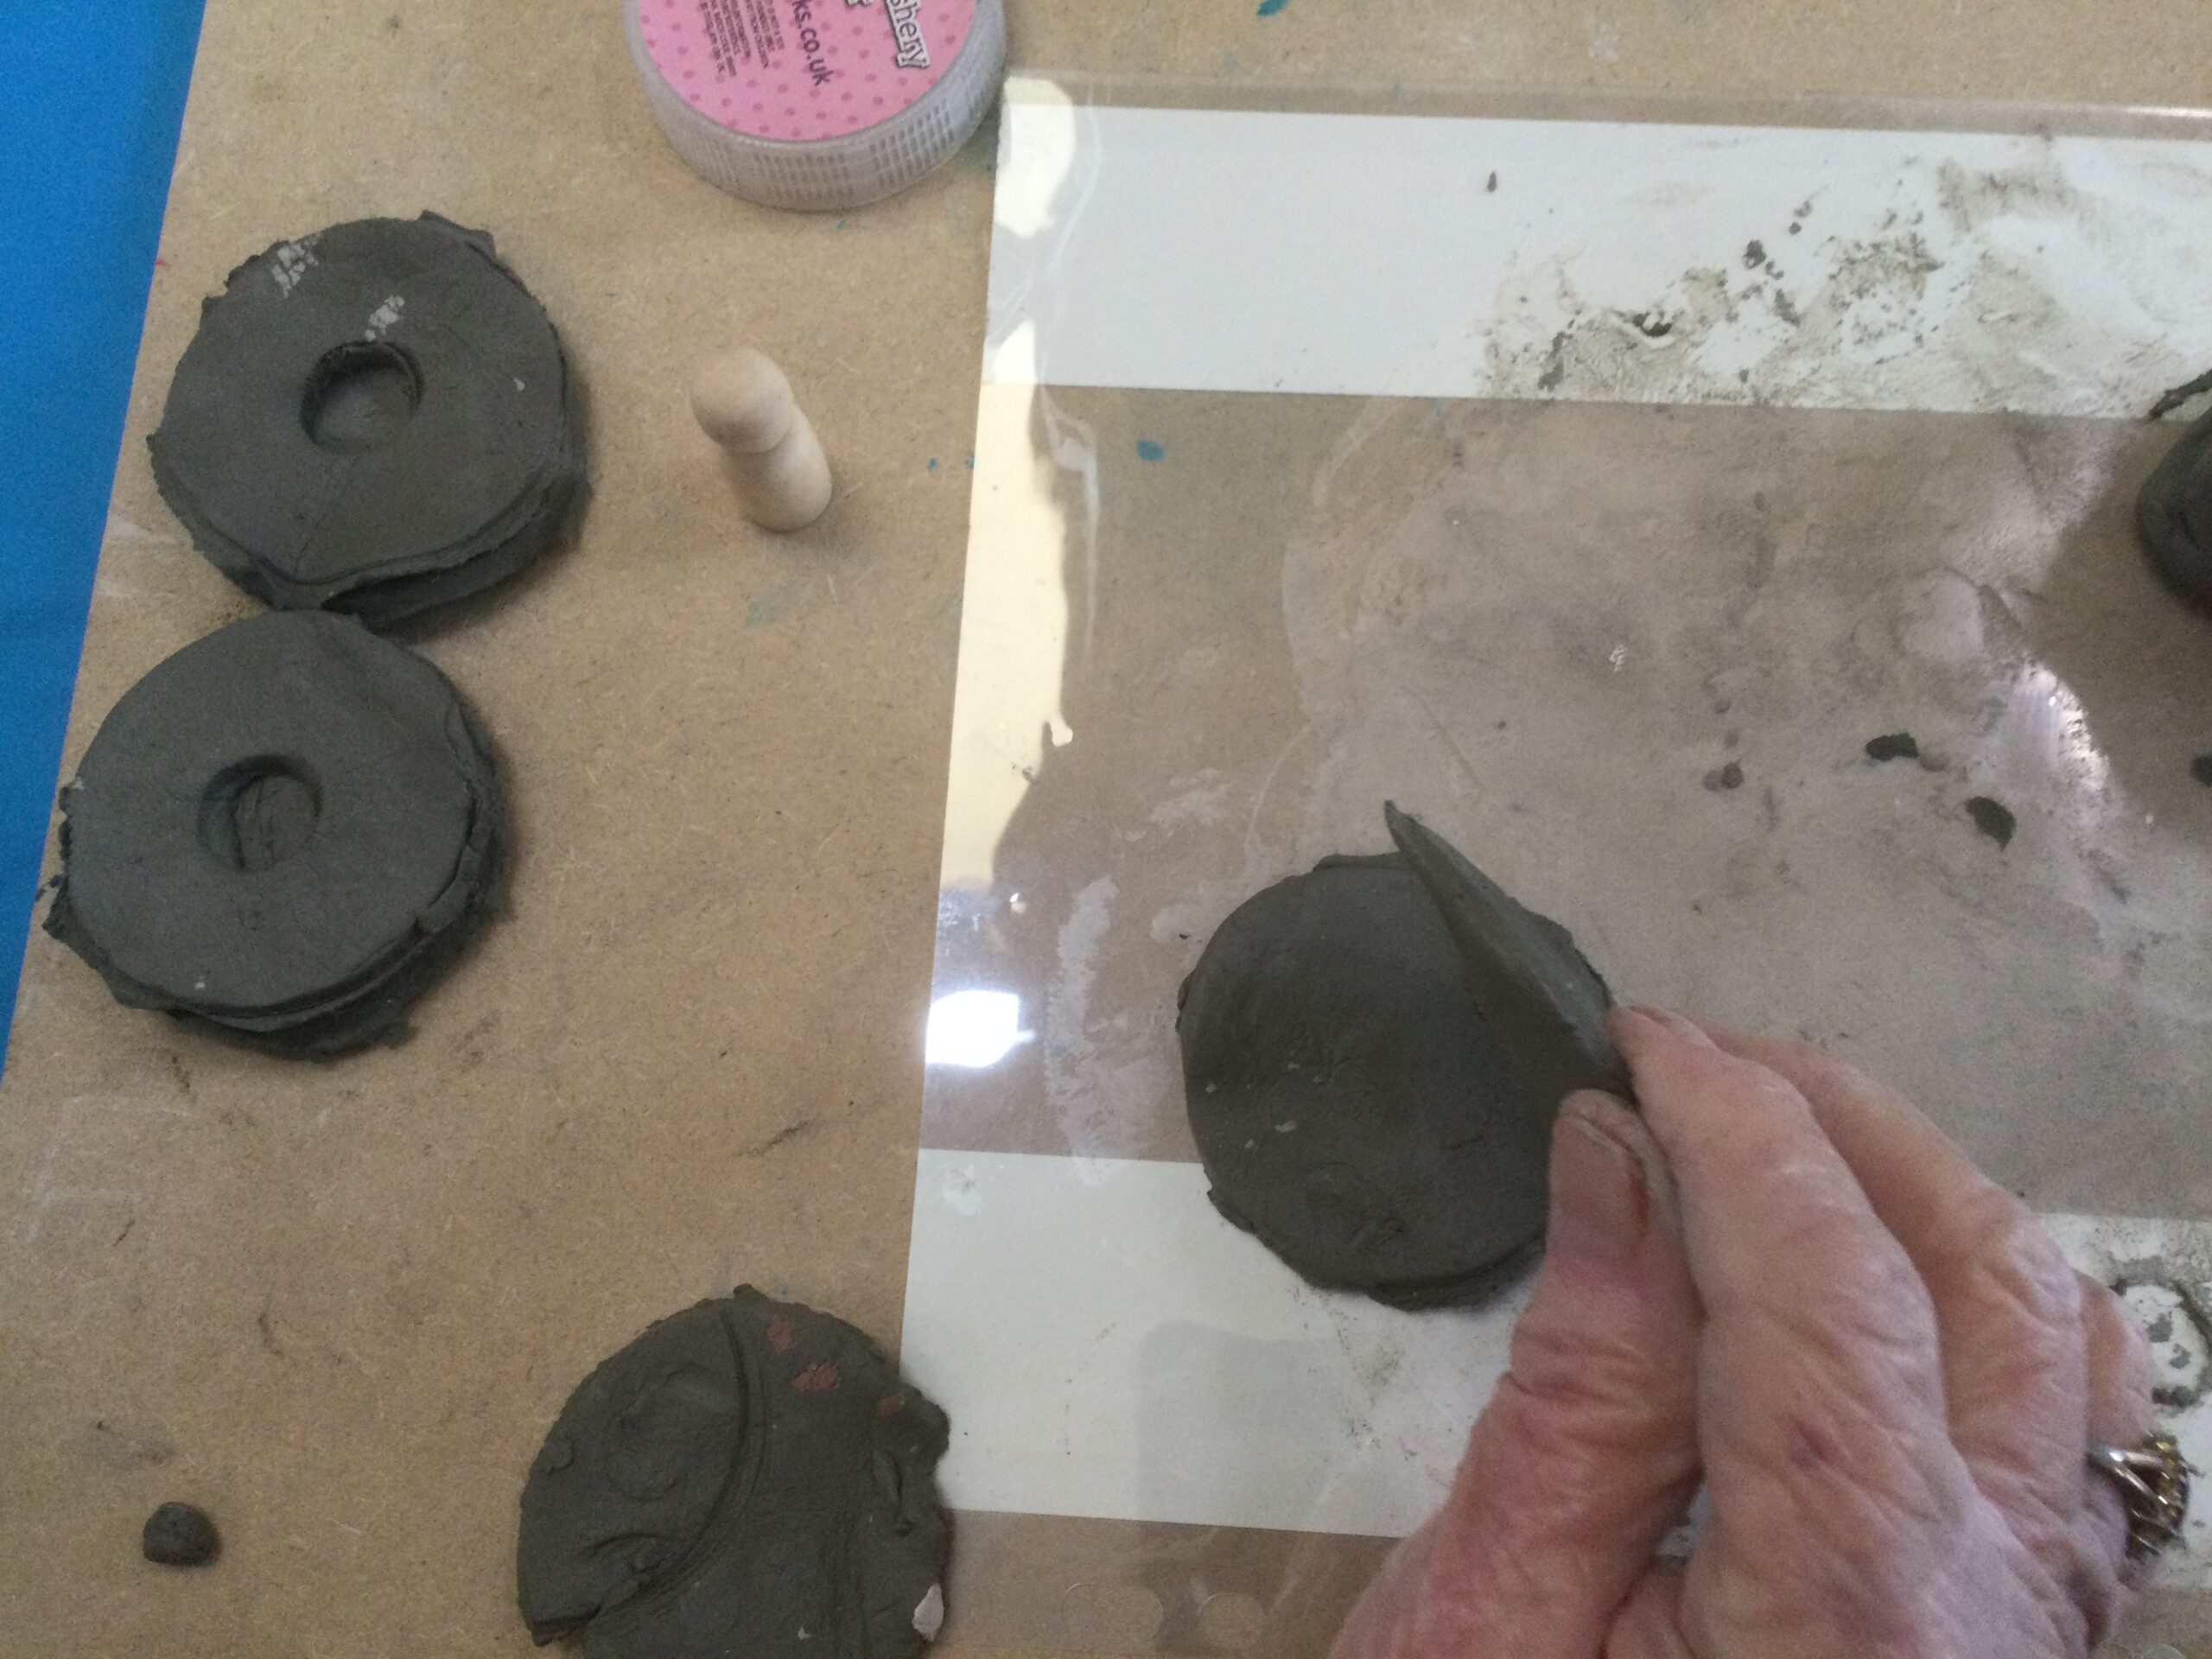 Various circles cut out of damp clay